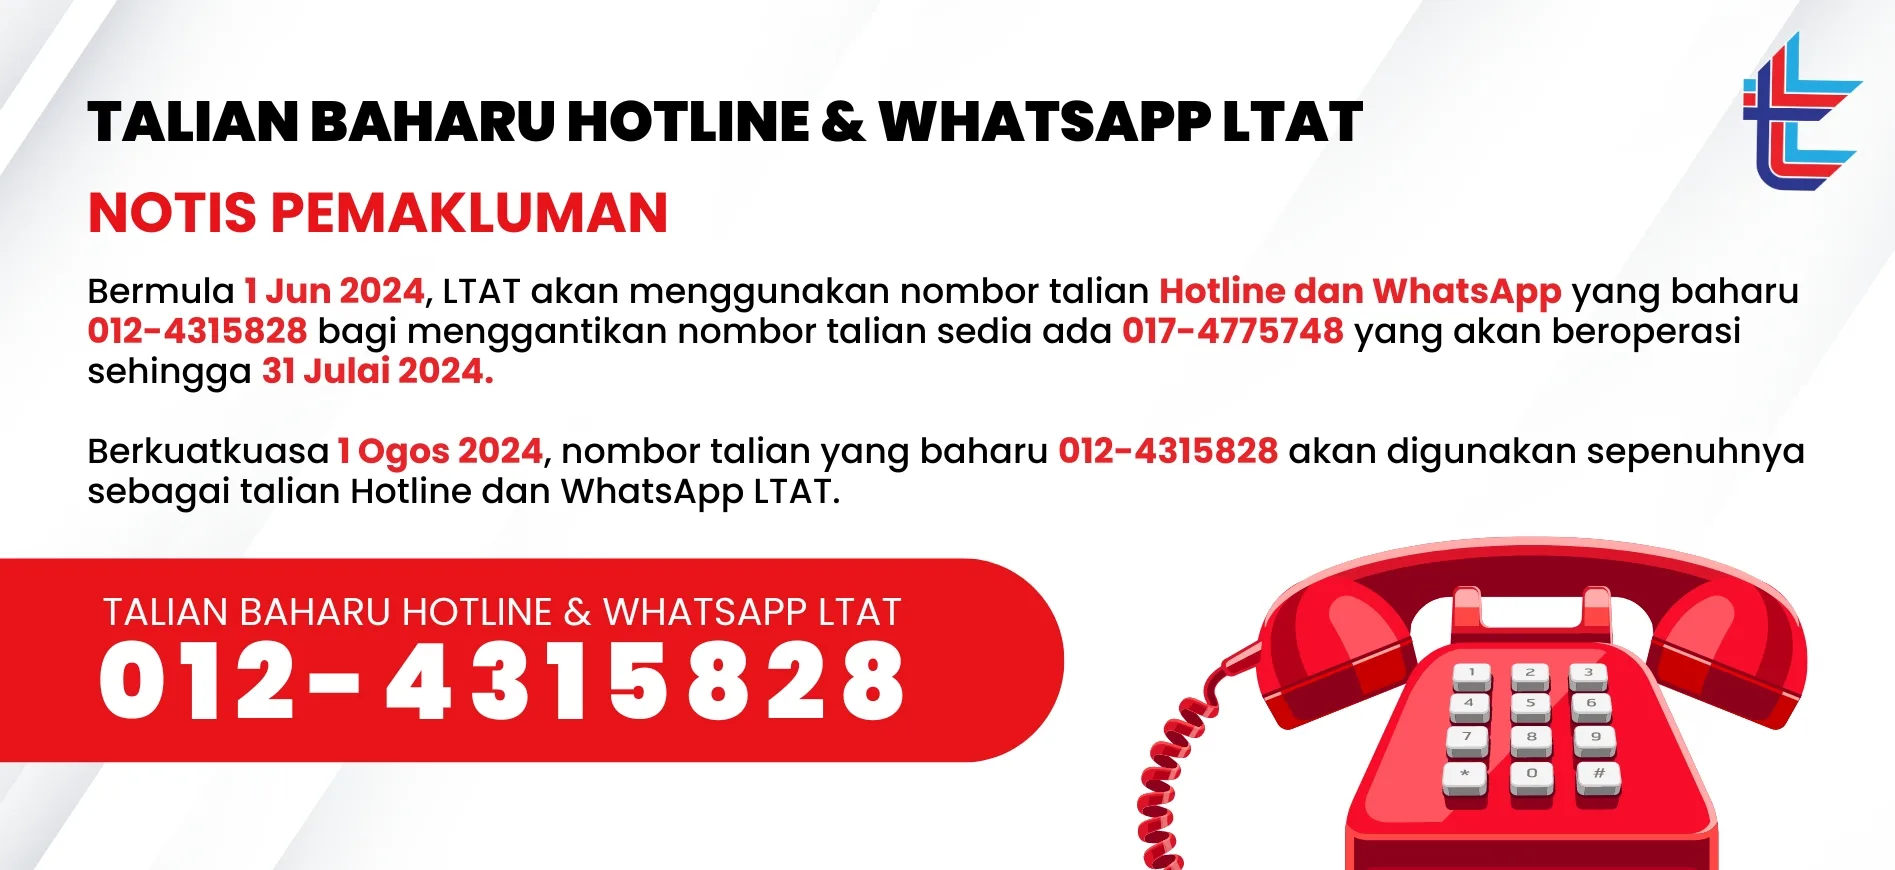 240521-Talian Baharu Hotline & Whatapps LTAT (1895 x 870 px) (1)